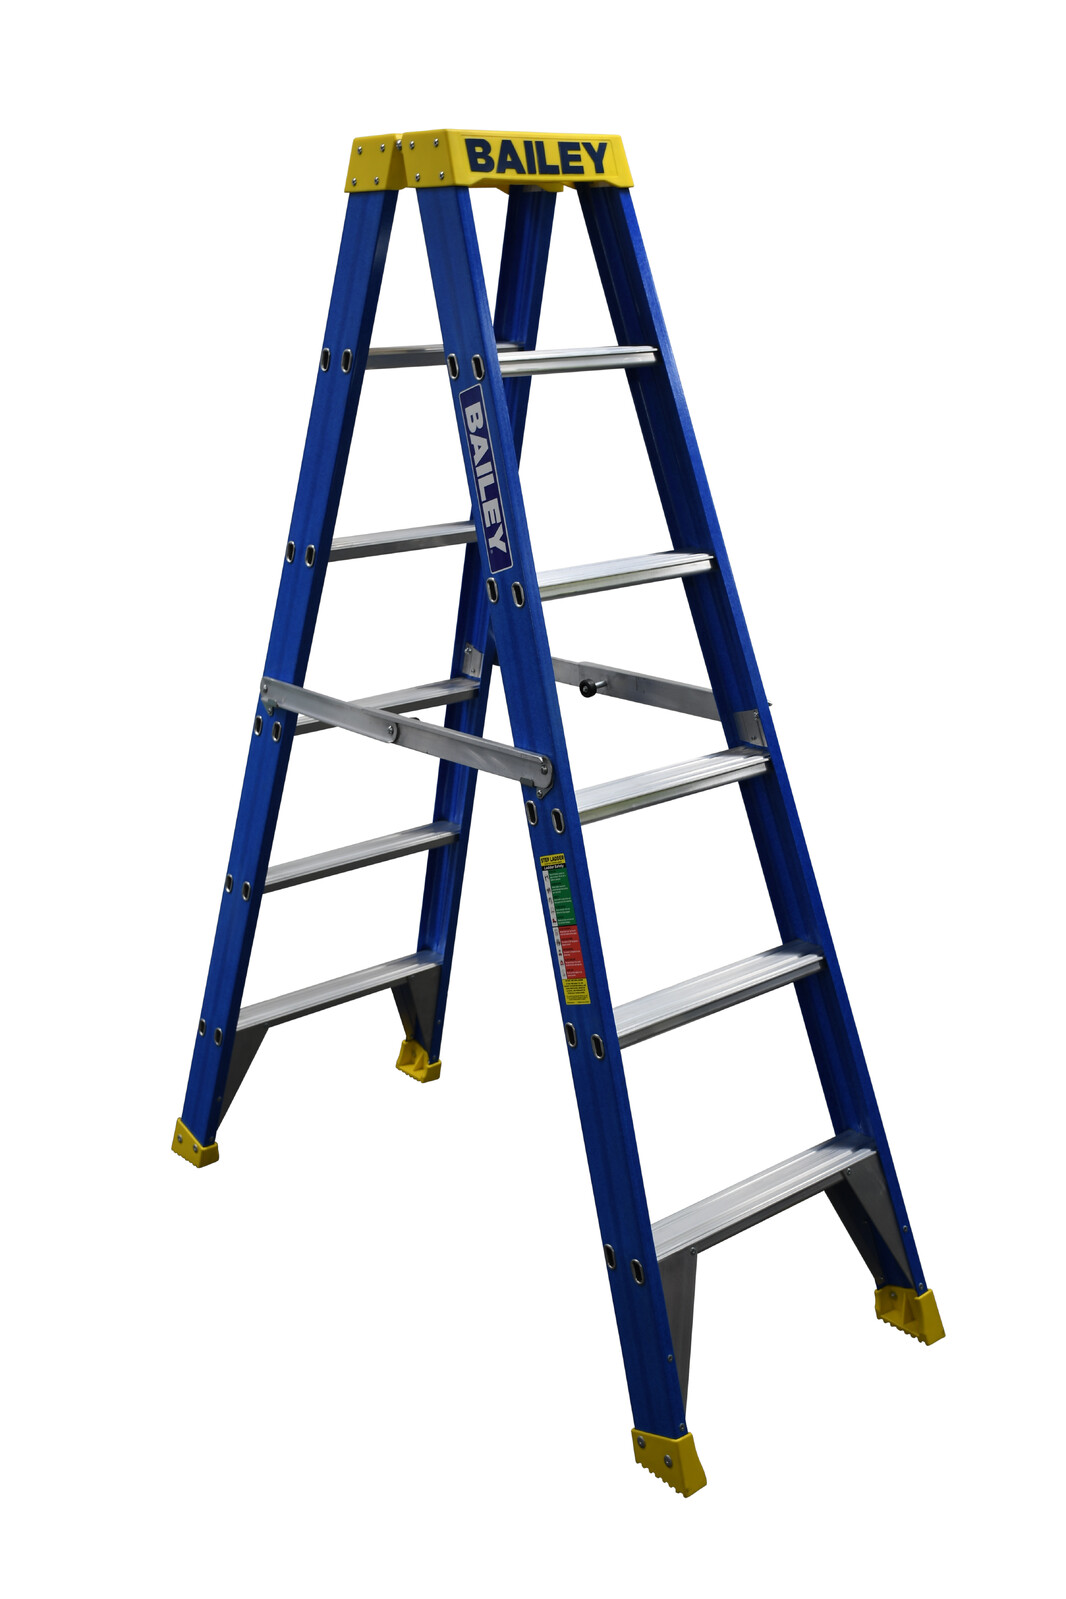 bailey 6 step ladder